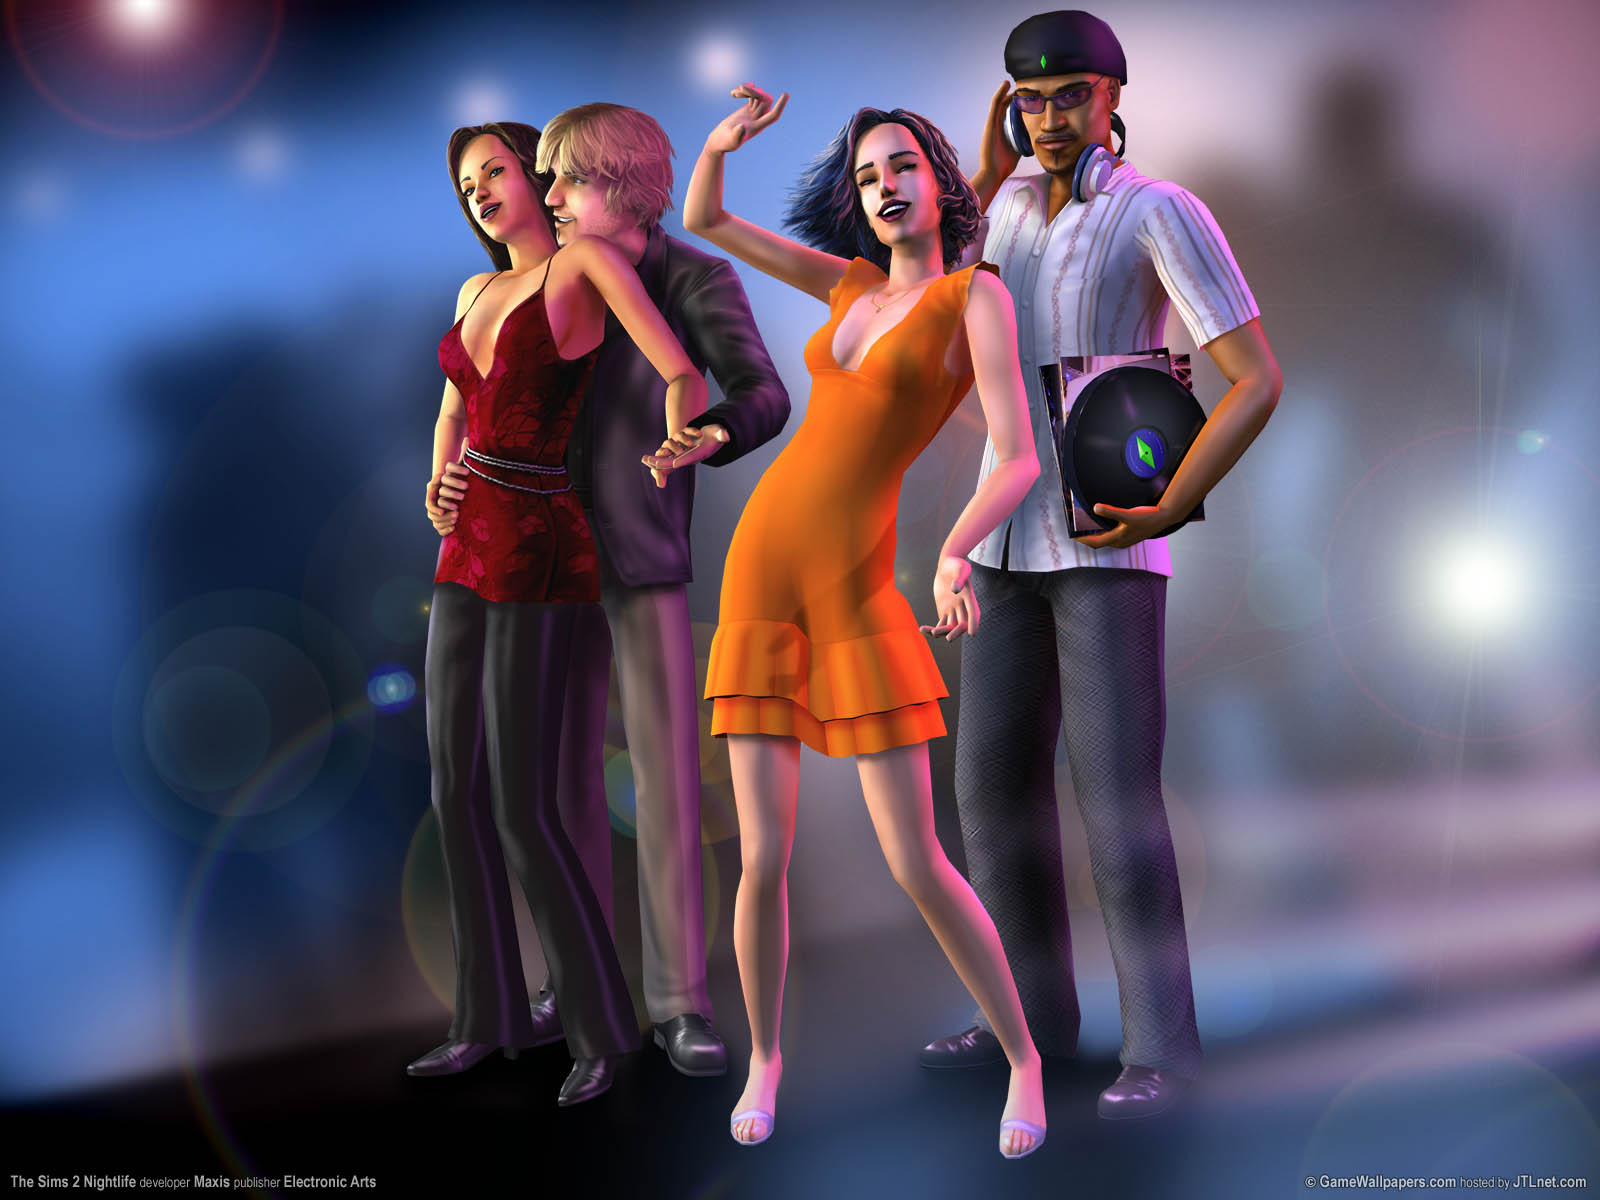 The Sims 2 Nightlife - Free desktop wallpapers download